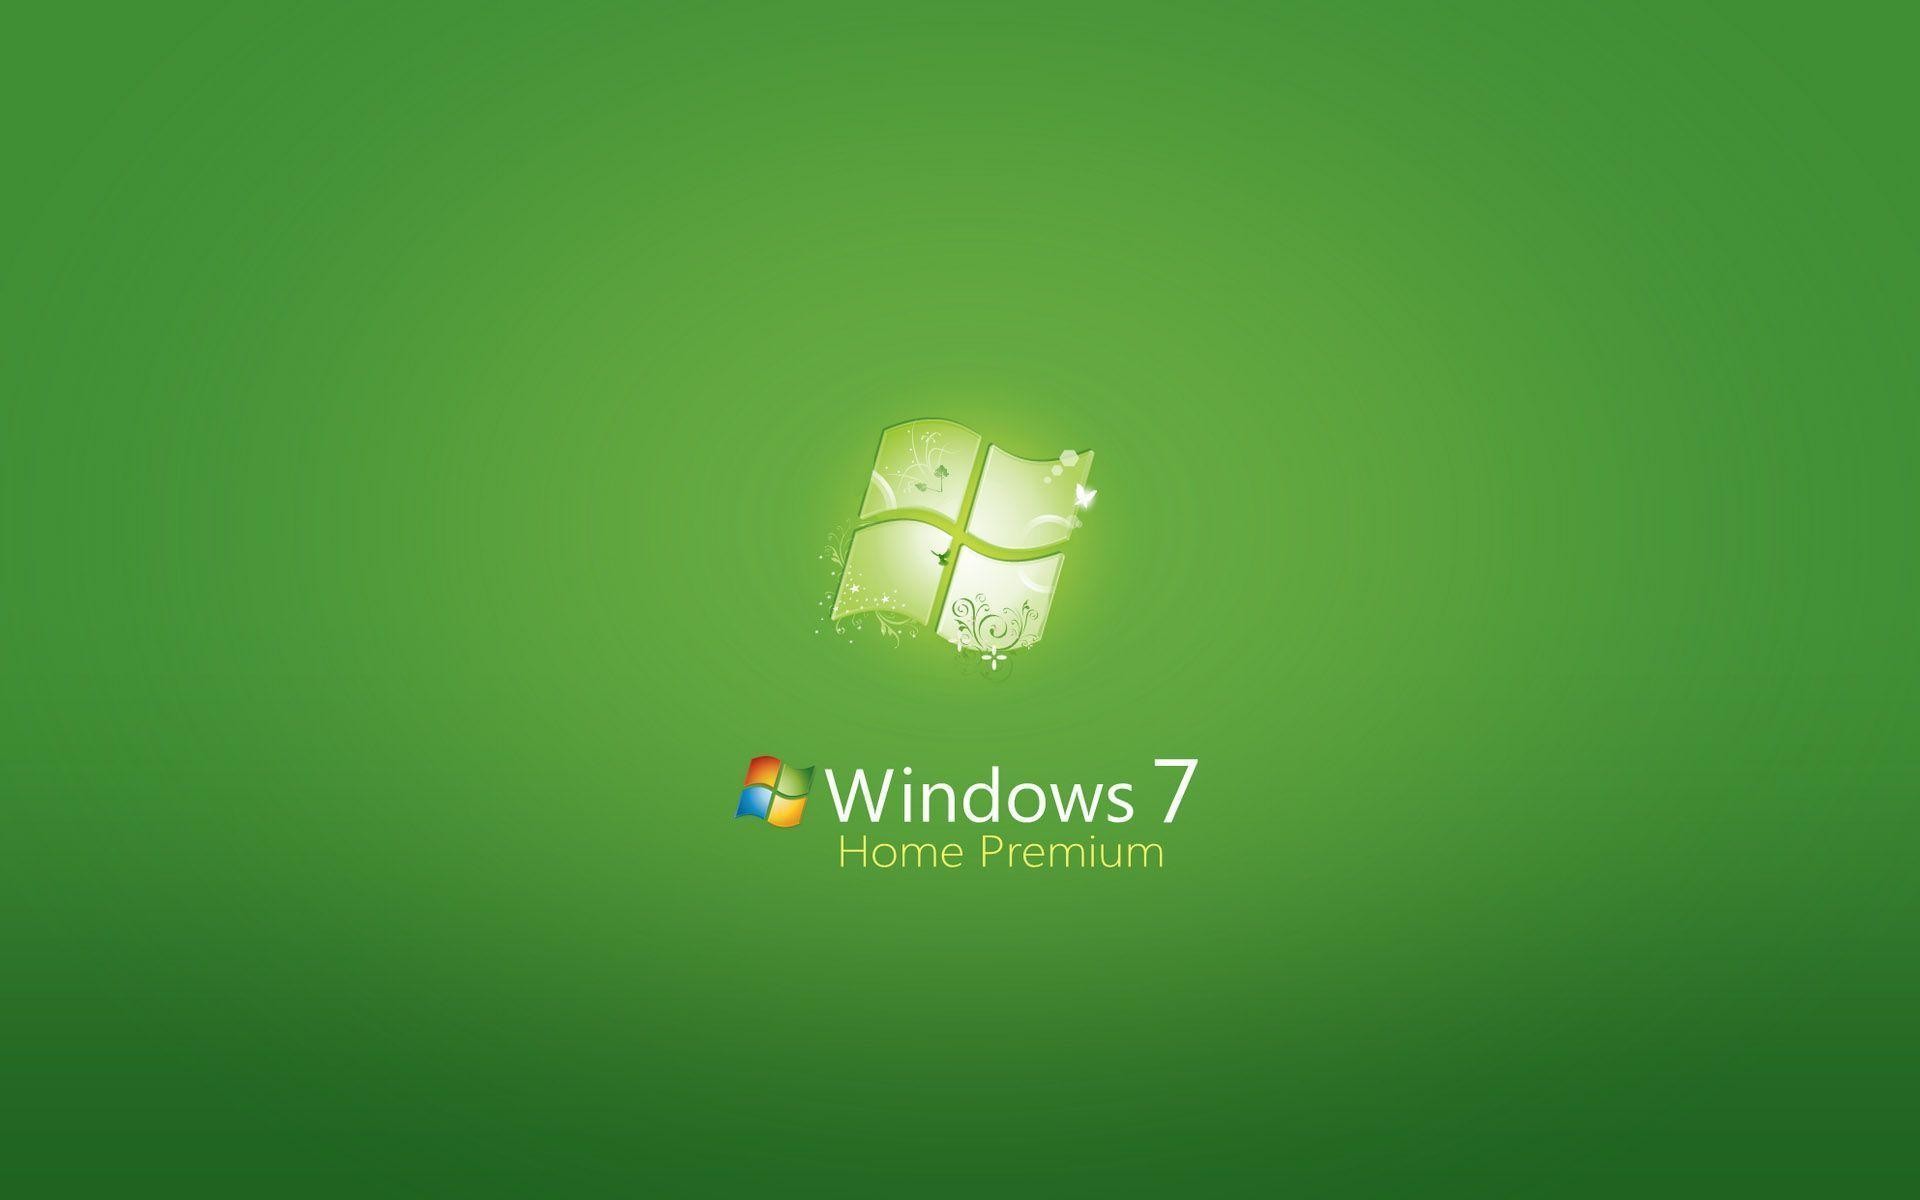 Windows 7 Home Premium Wallpaper (64+ pictures)